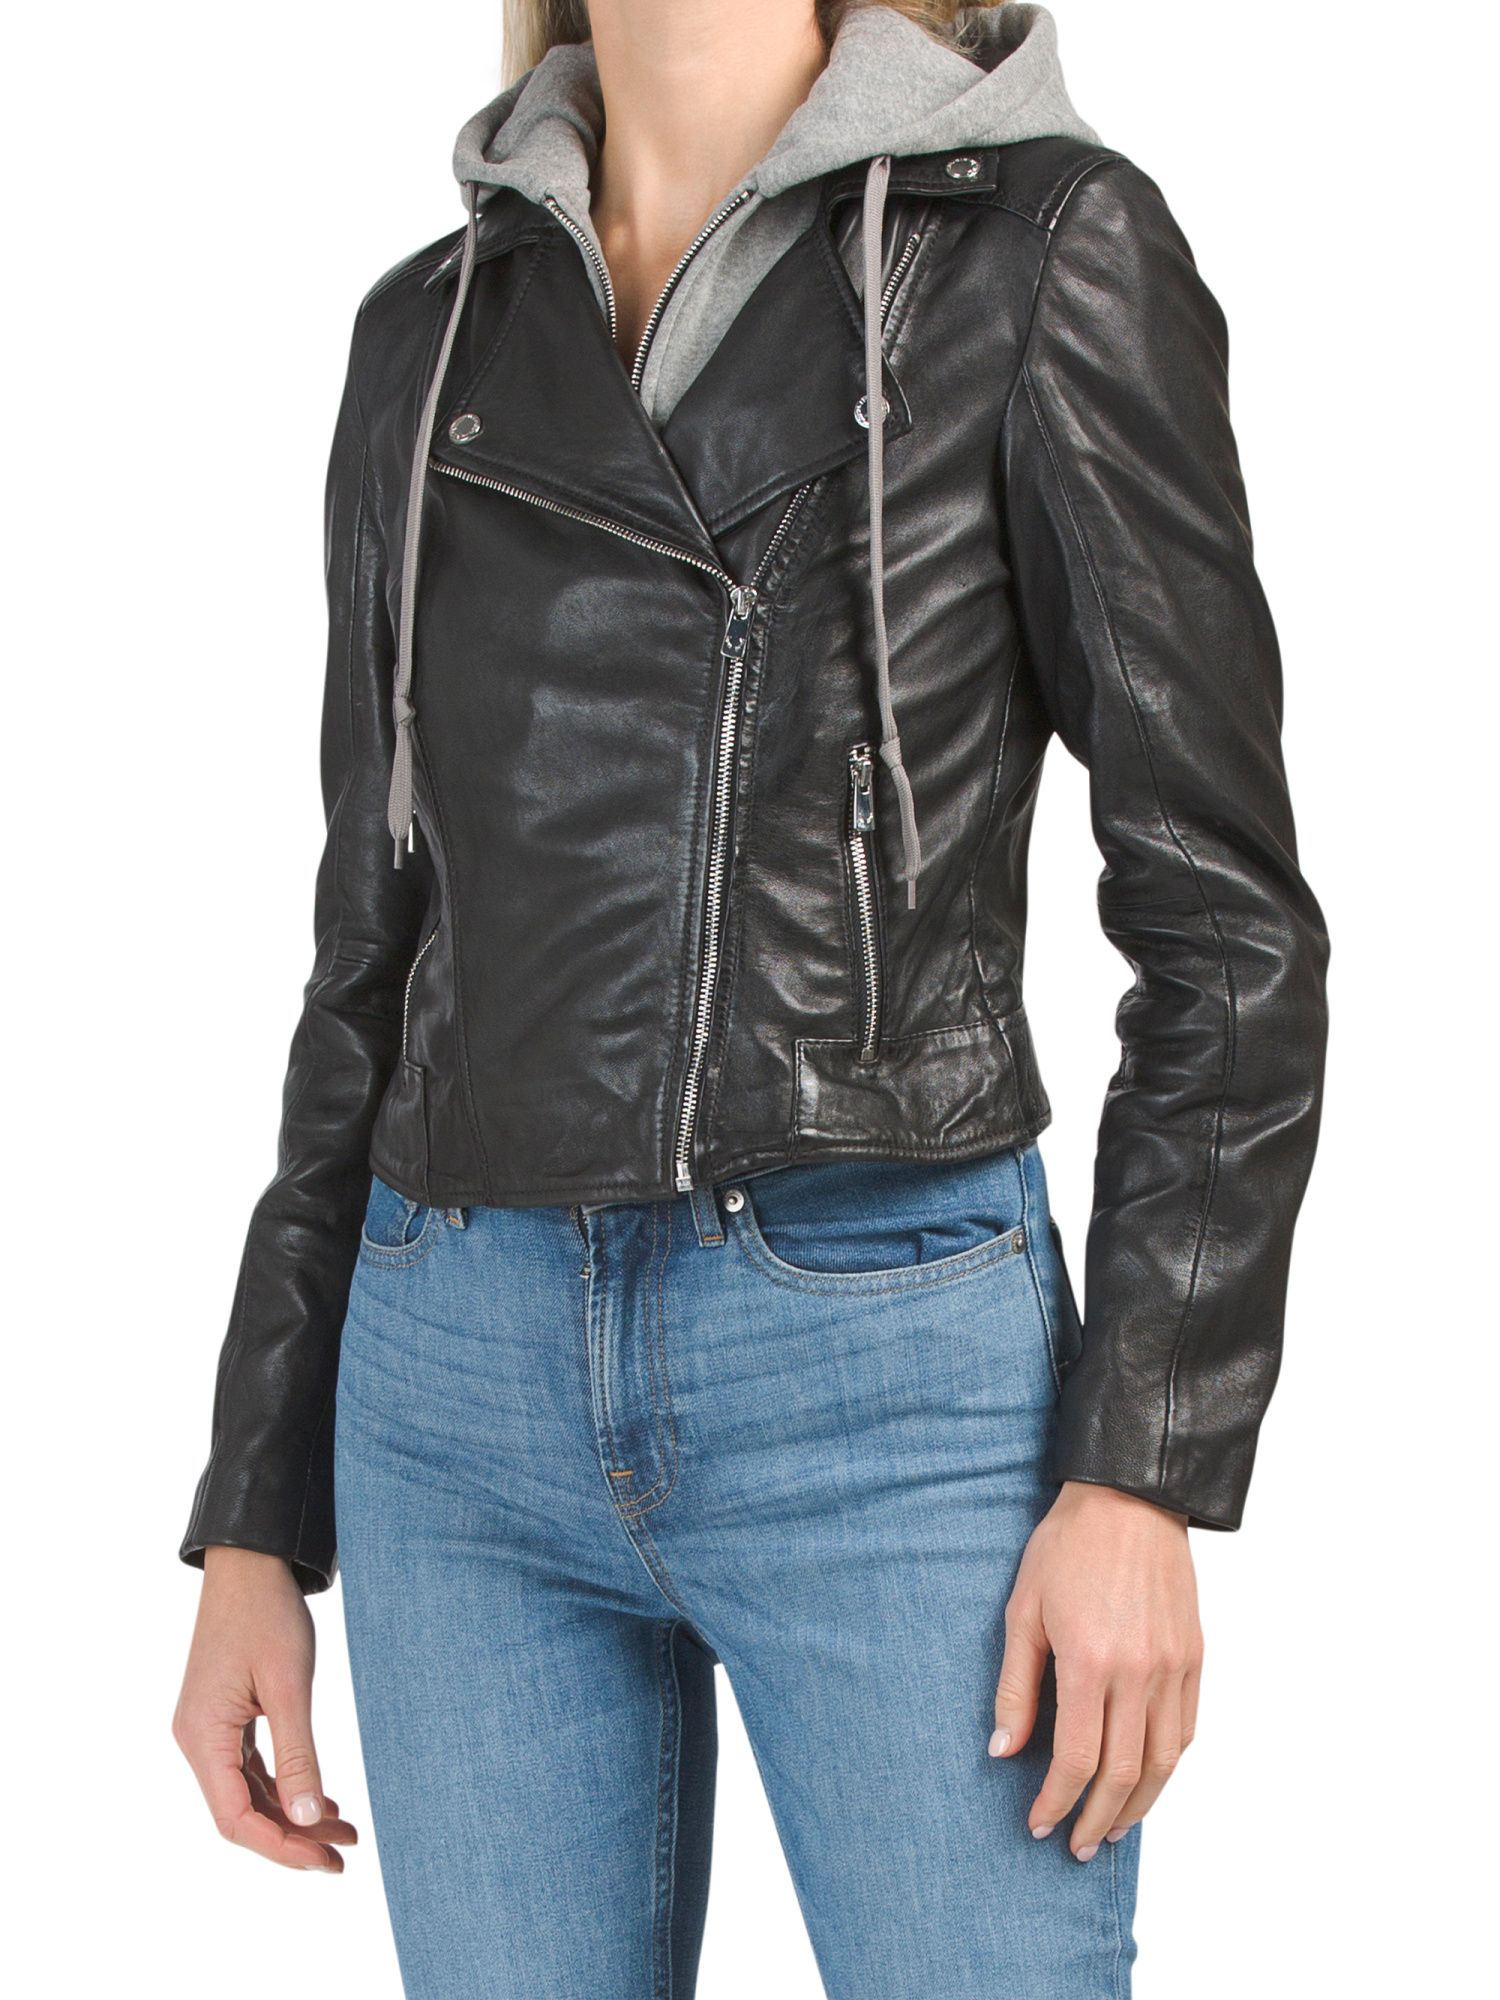 Leather Moto Jacket With Removable Hood | Midweight Jackets | Marshalls | Marshalls